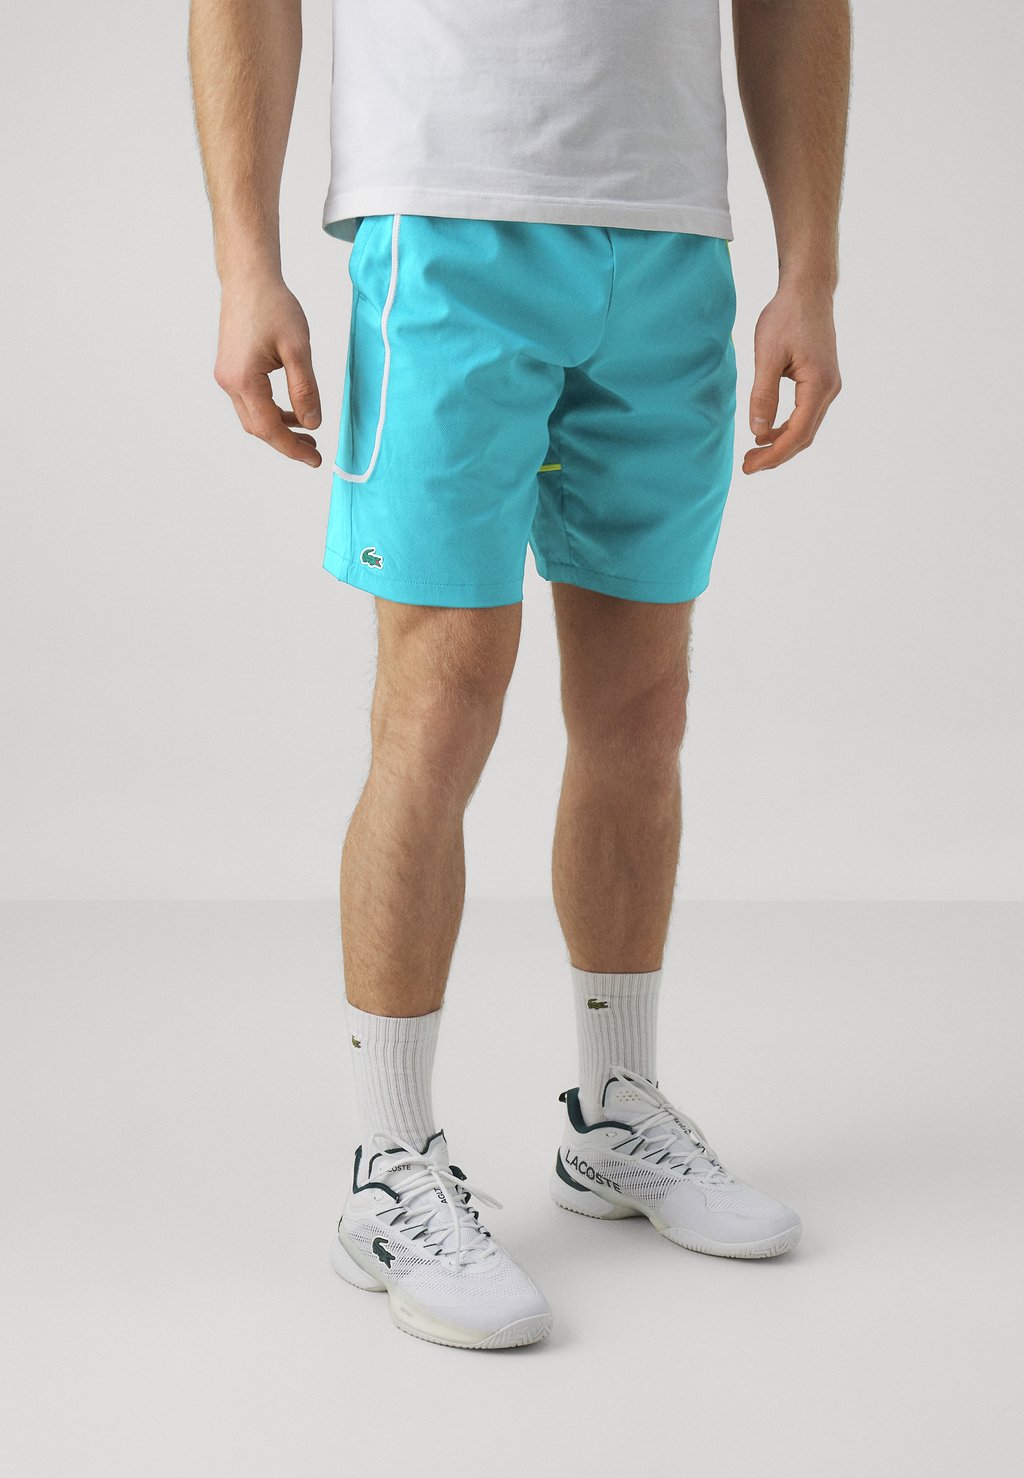 Спортивные шорты Shorts Tennis Players Lacoste, цвет hydro шорты lacoste sport lined tennis shorts цвет navy blue